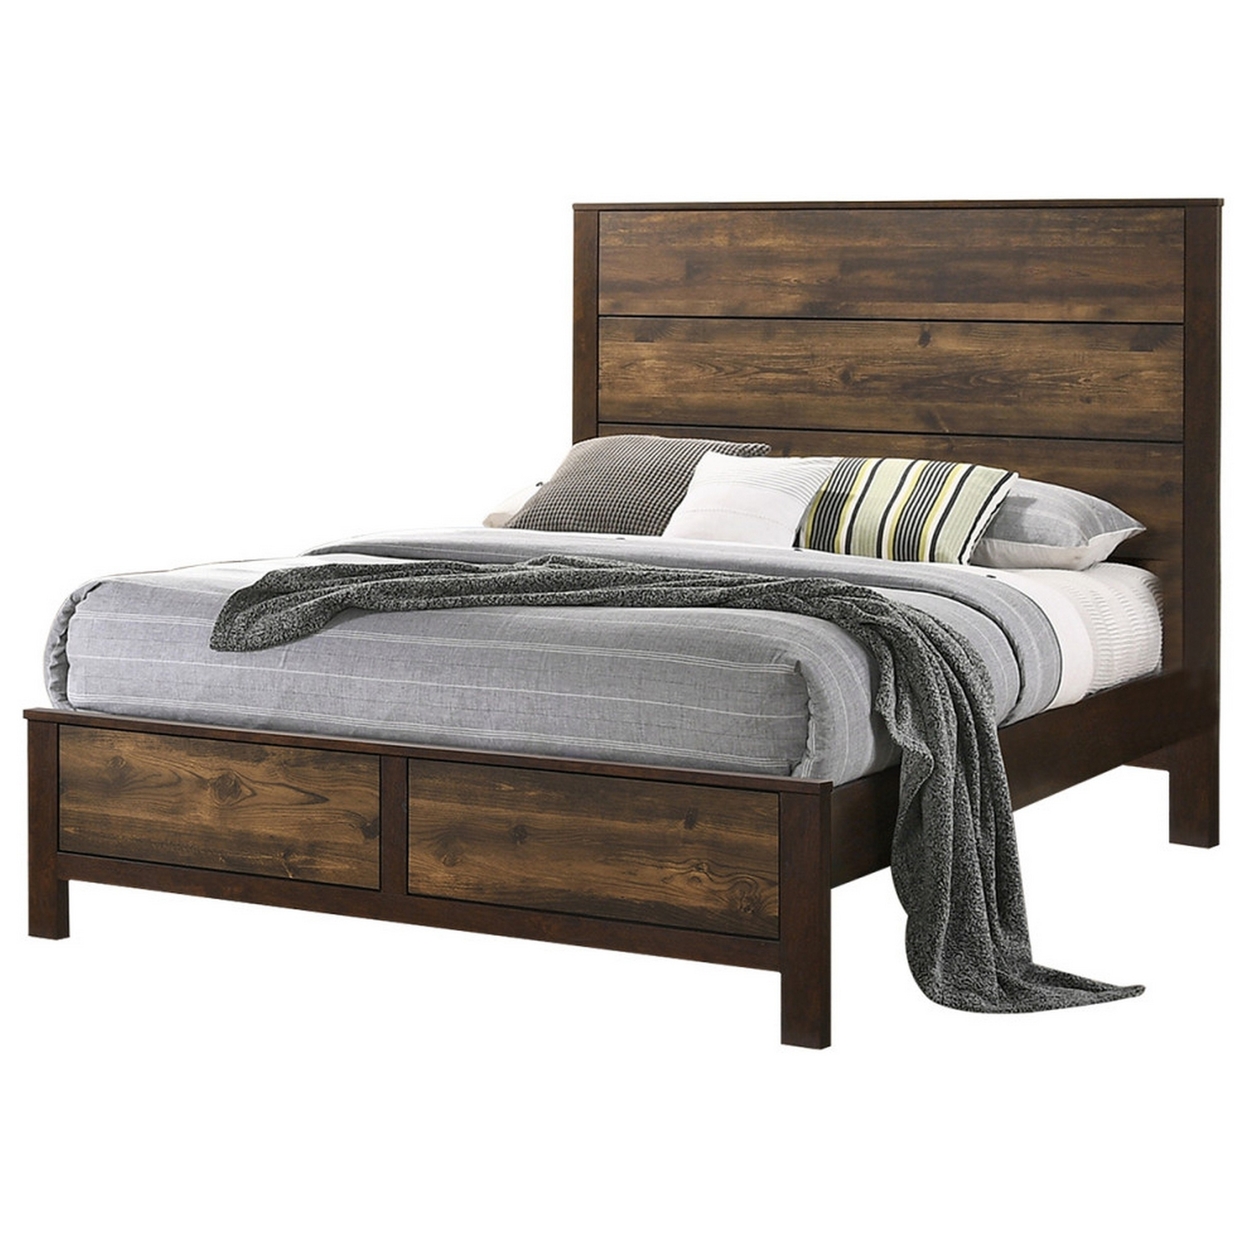 Roki Platform California King Bed With Panel Design, Rustic Brown Finish - Saltoro Sherpi